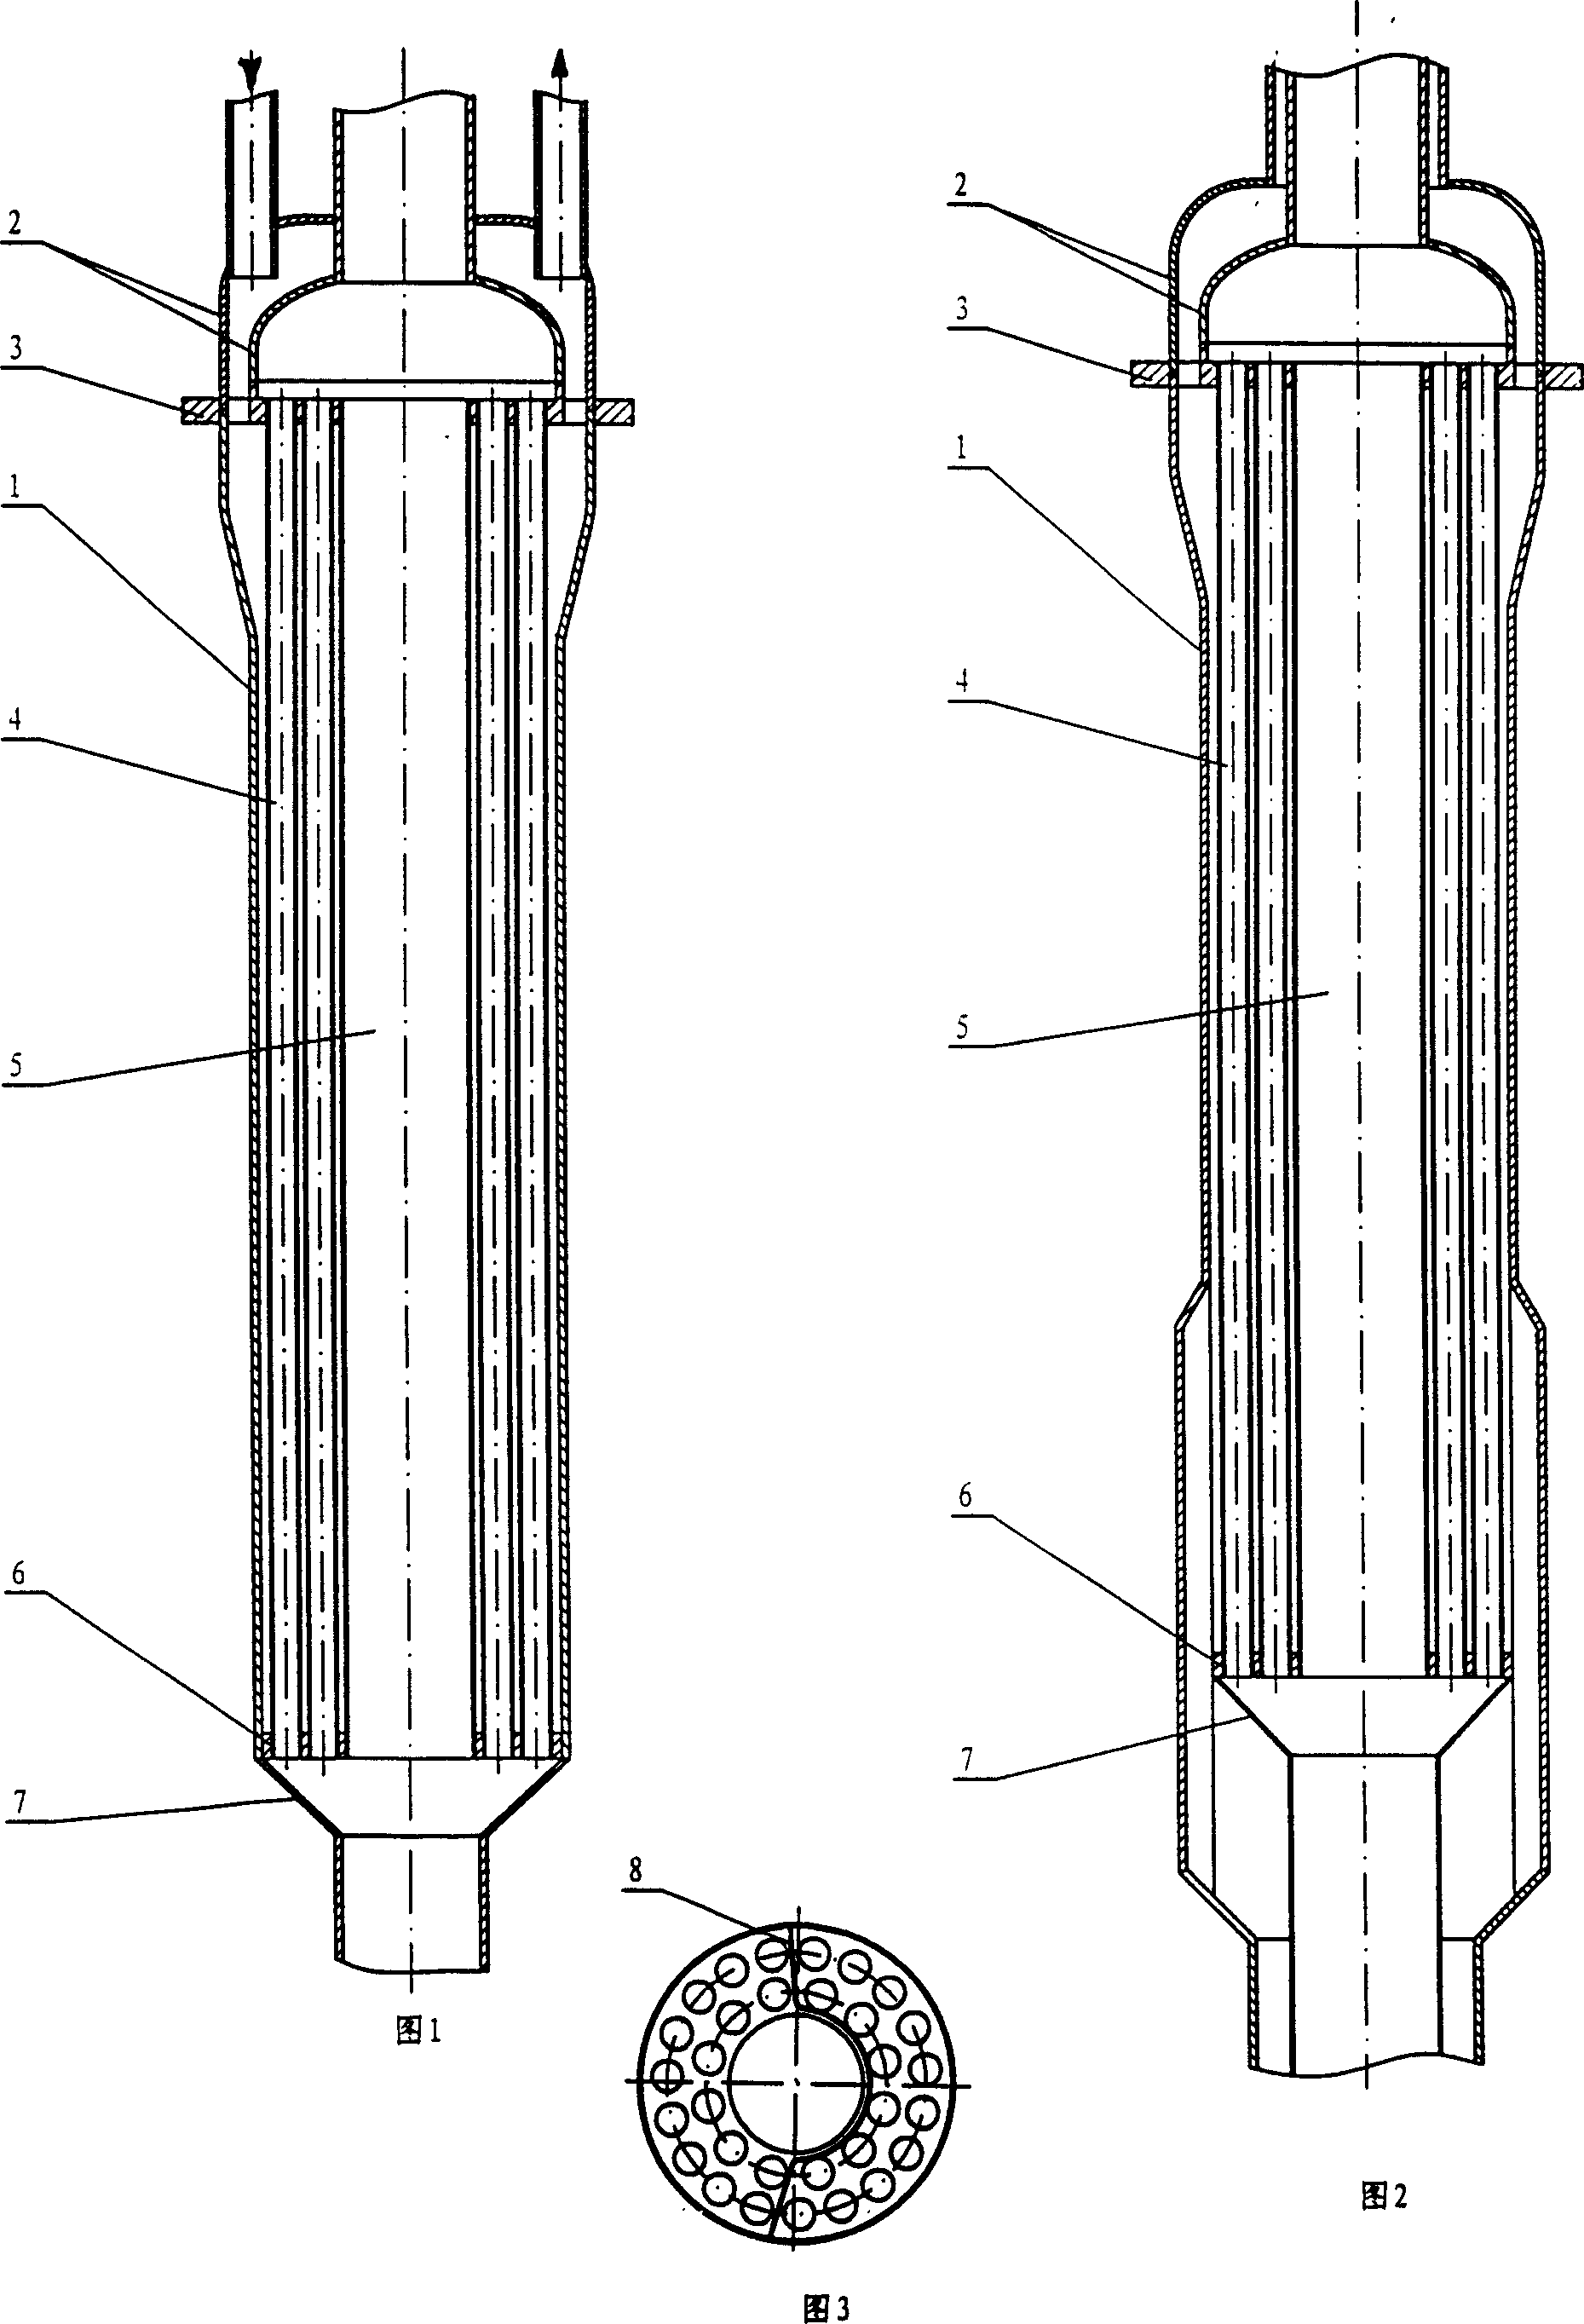 A moderator condenser using in vertical pore path of reactor cold neutron source